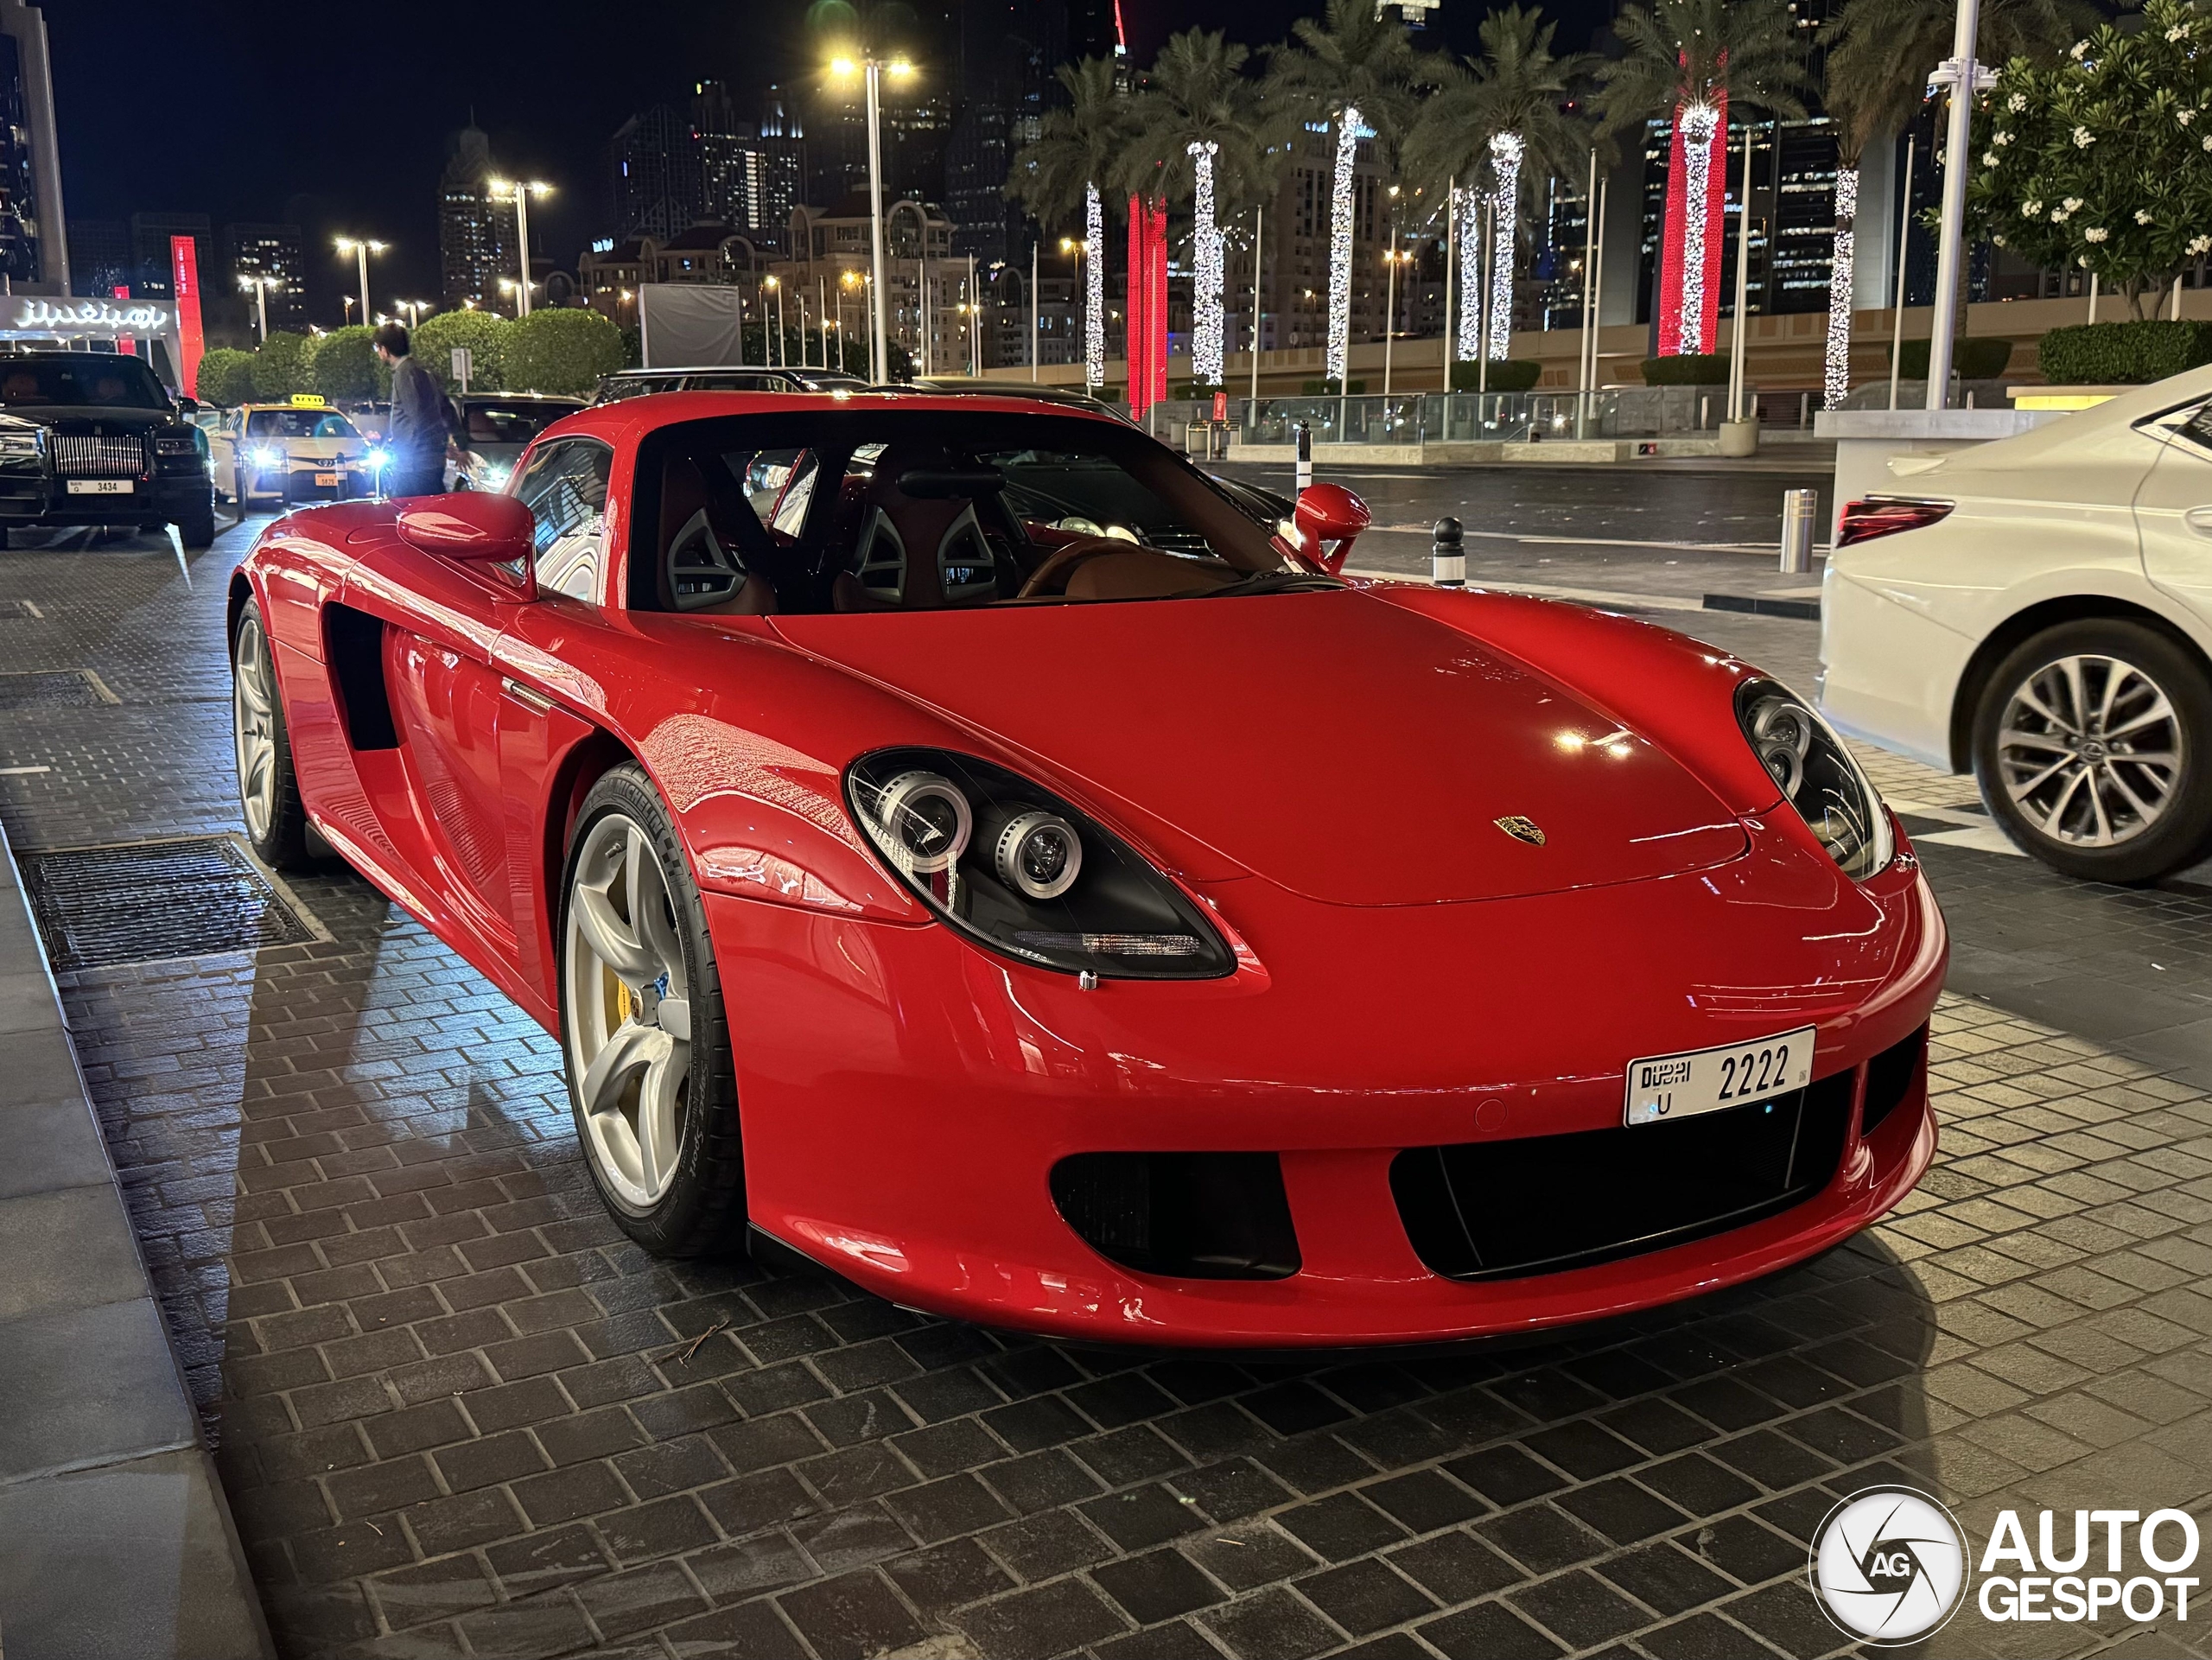 A red Porsche Carrera GT appears in Dubai